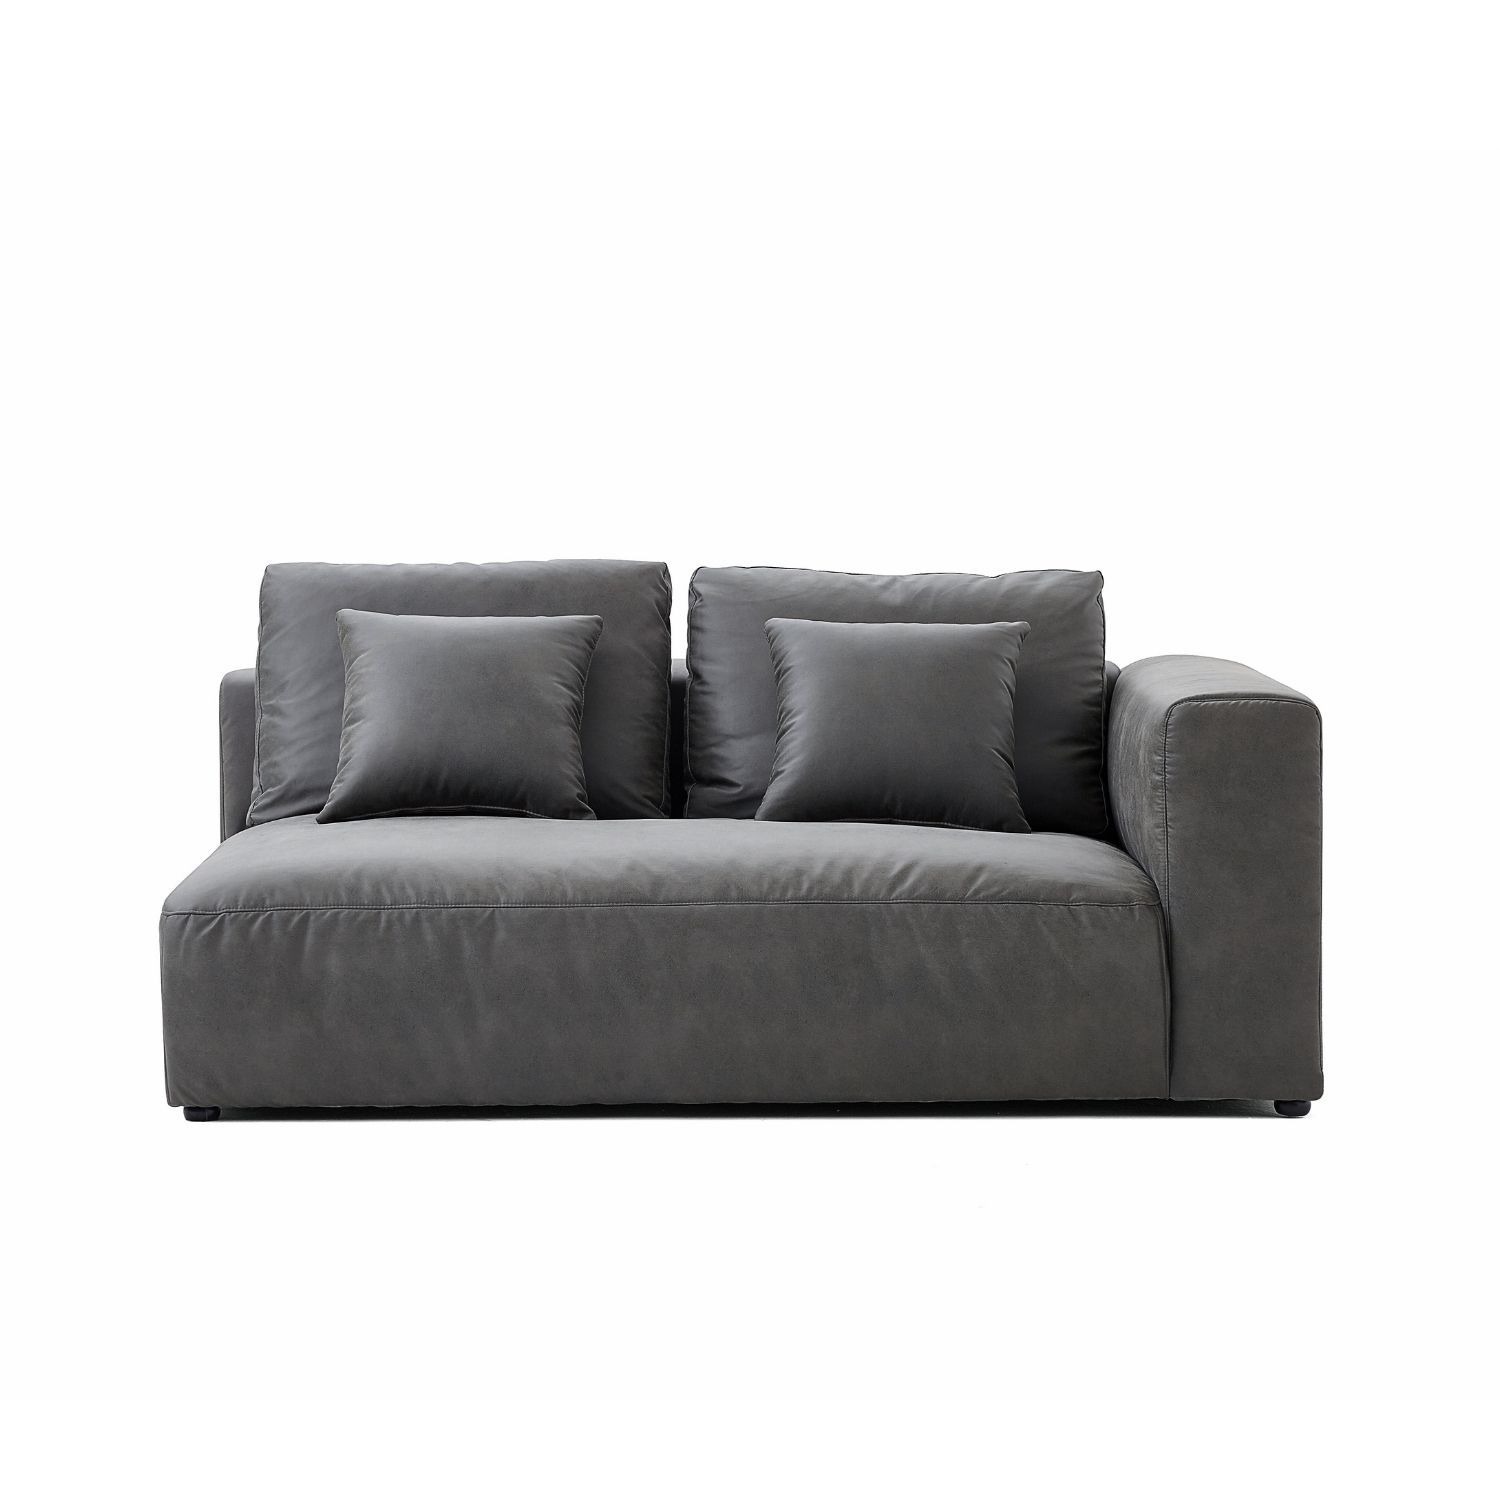 The 5th Side Sofa Sofa Foundry Dark Grey Facing Right 67 Inch